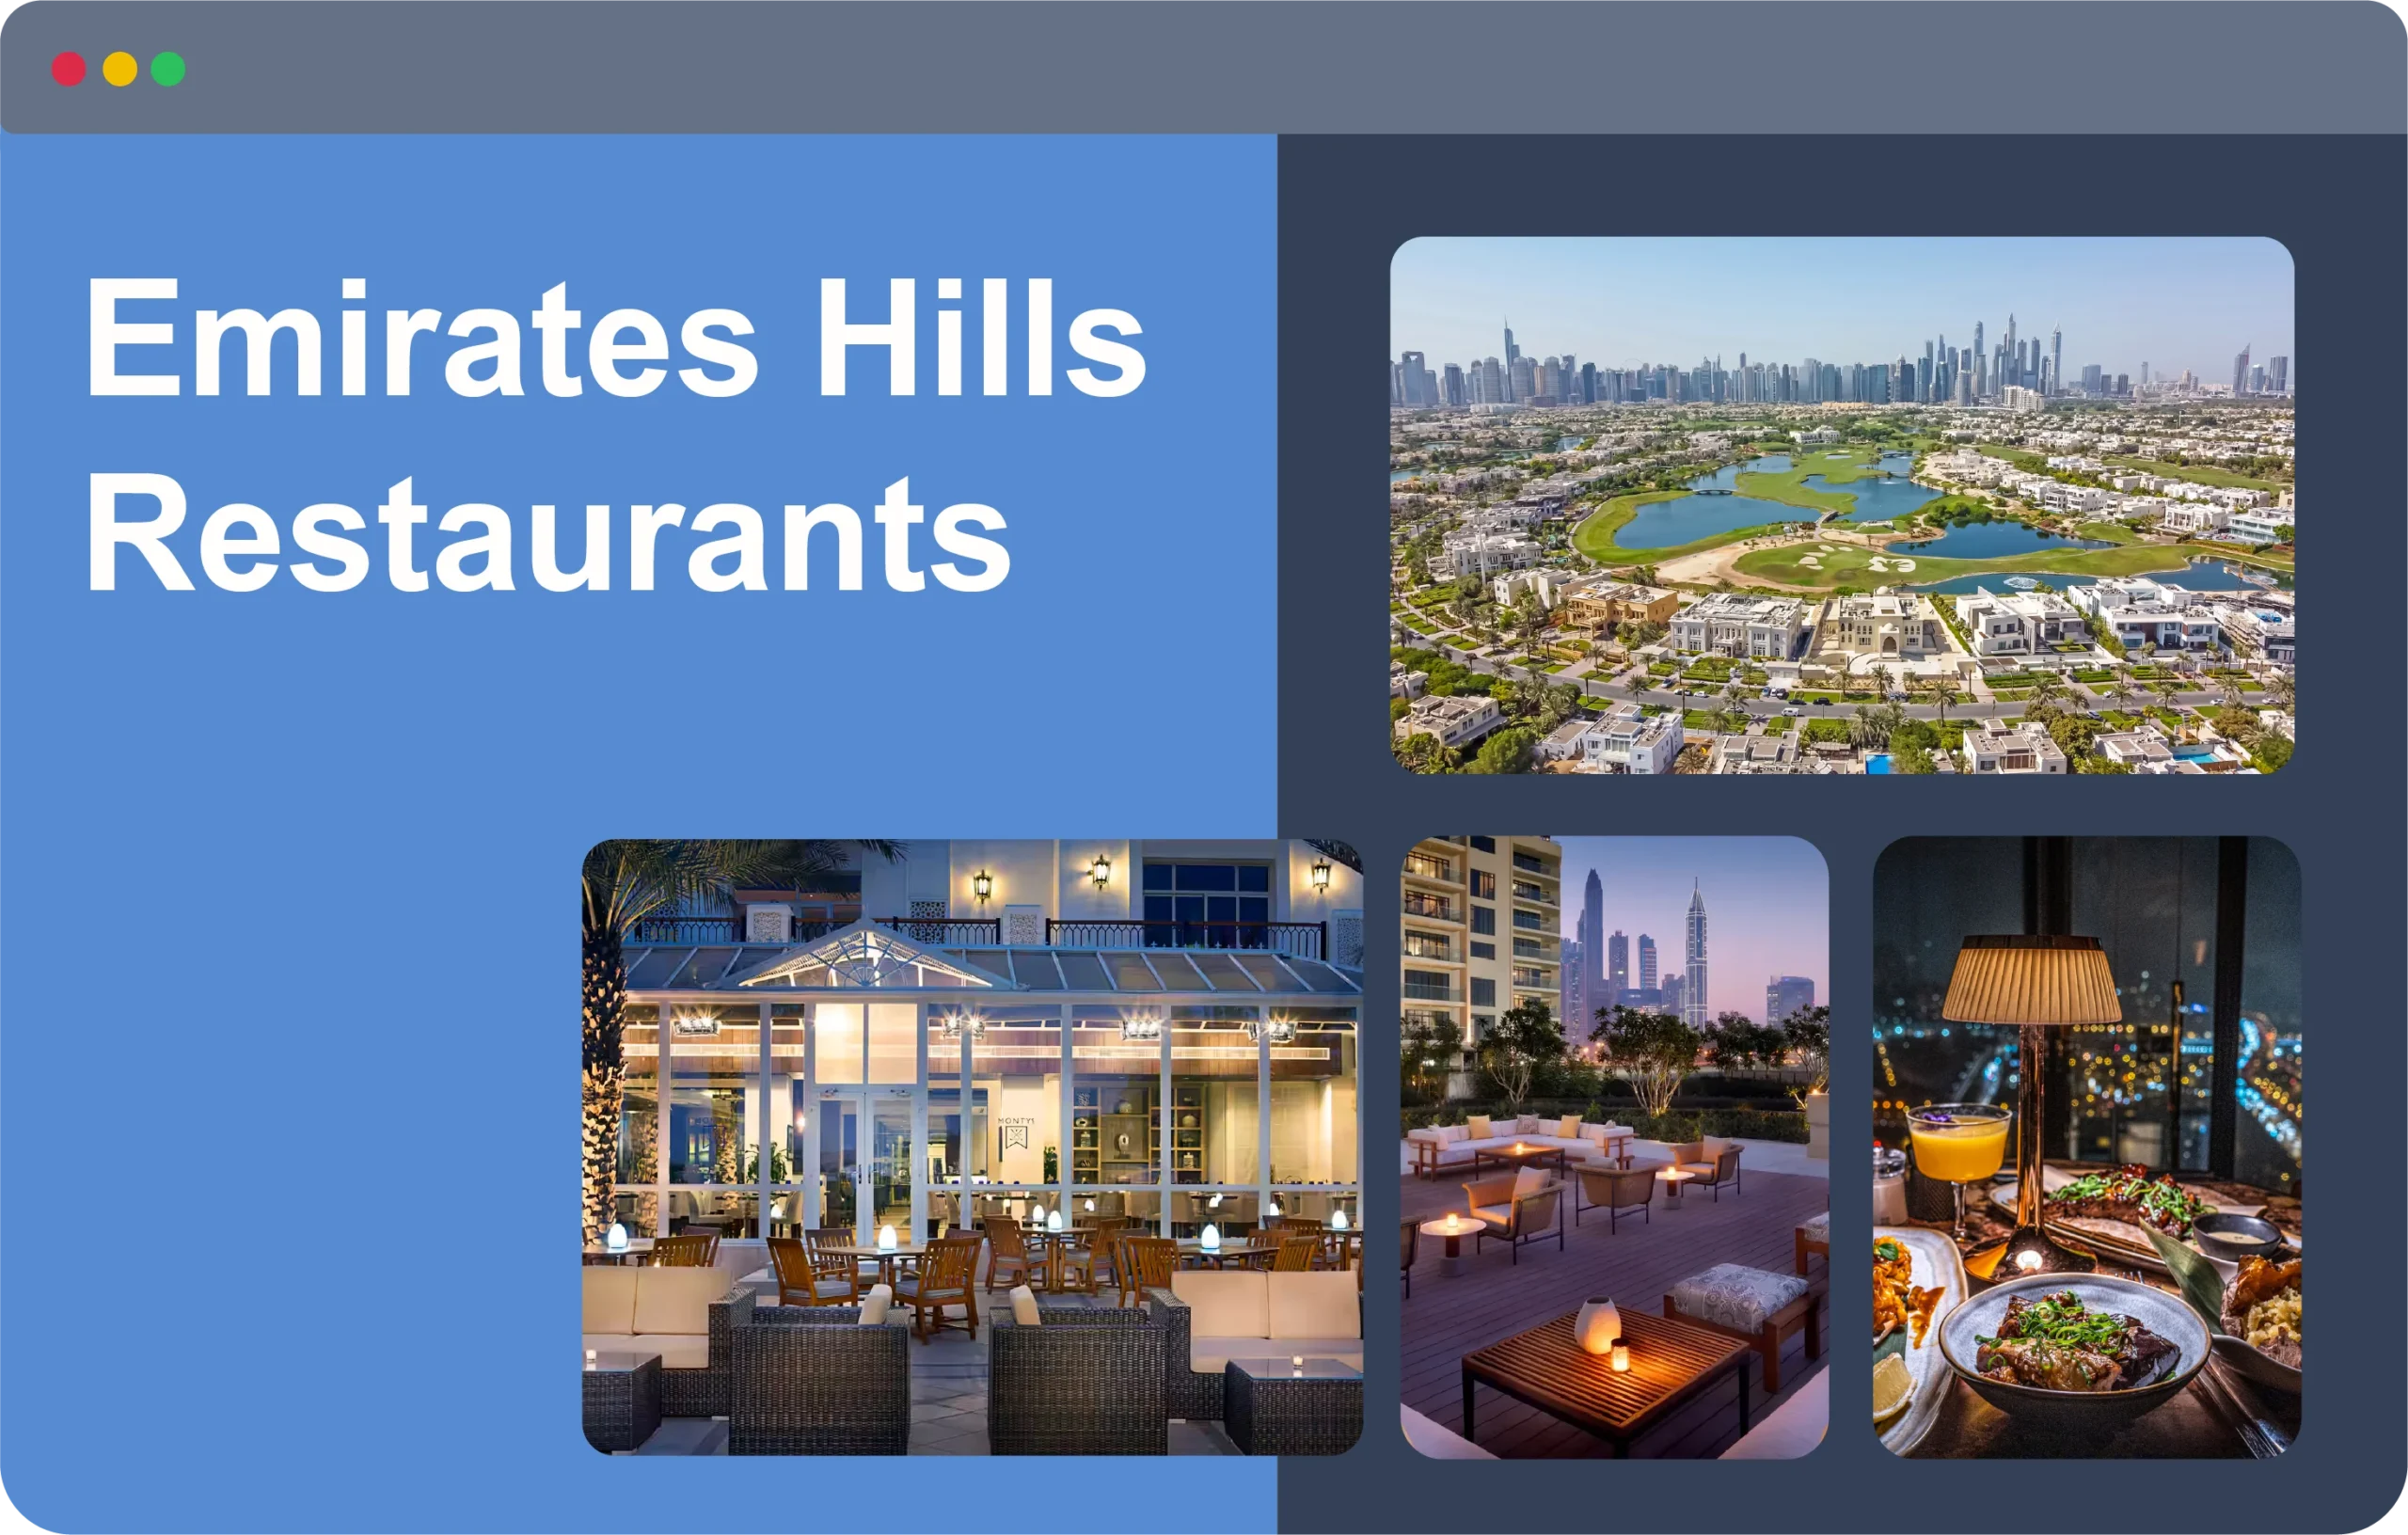 Emirate hills restaurant scaled